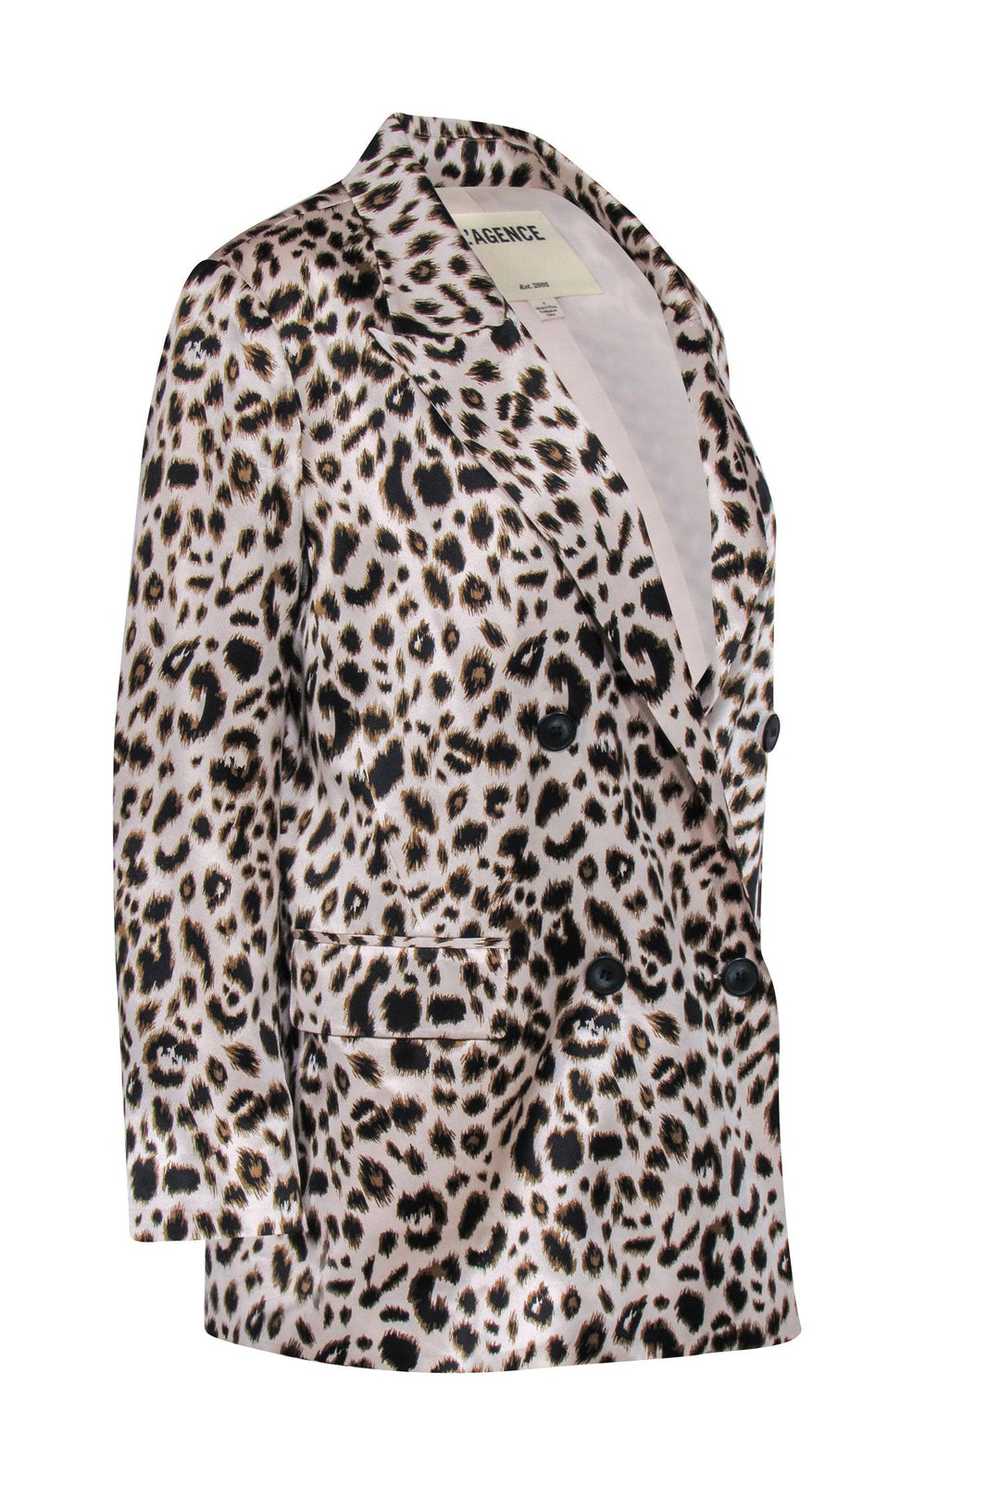 L'Agence - Cheetah Print Silk Double Breasted Bla… - image 2